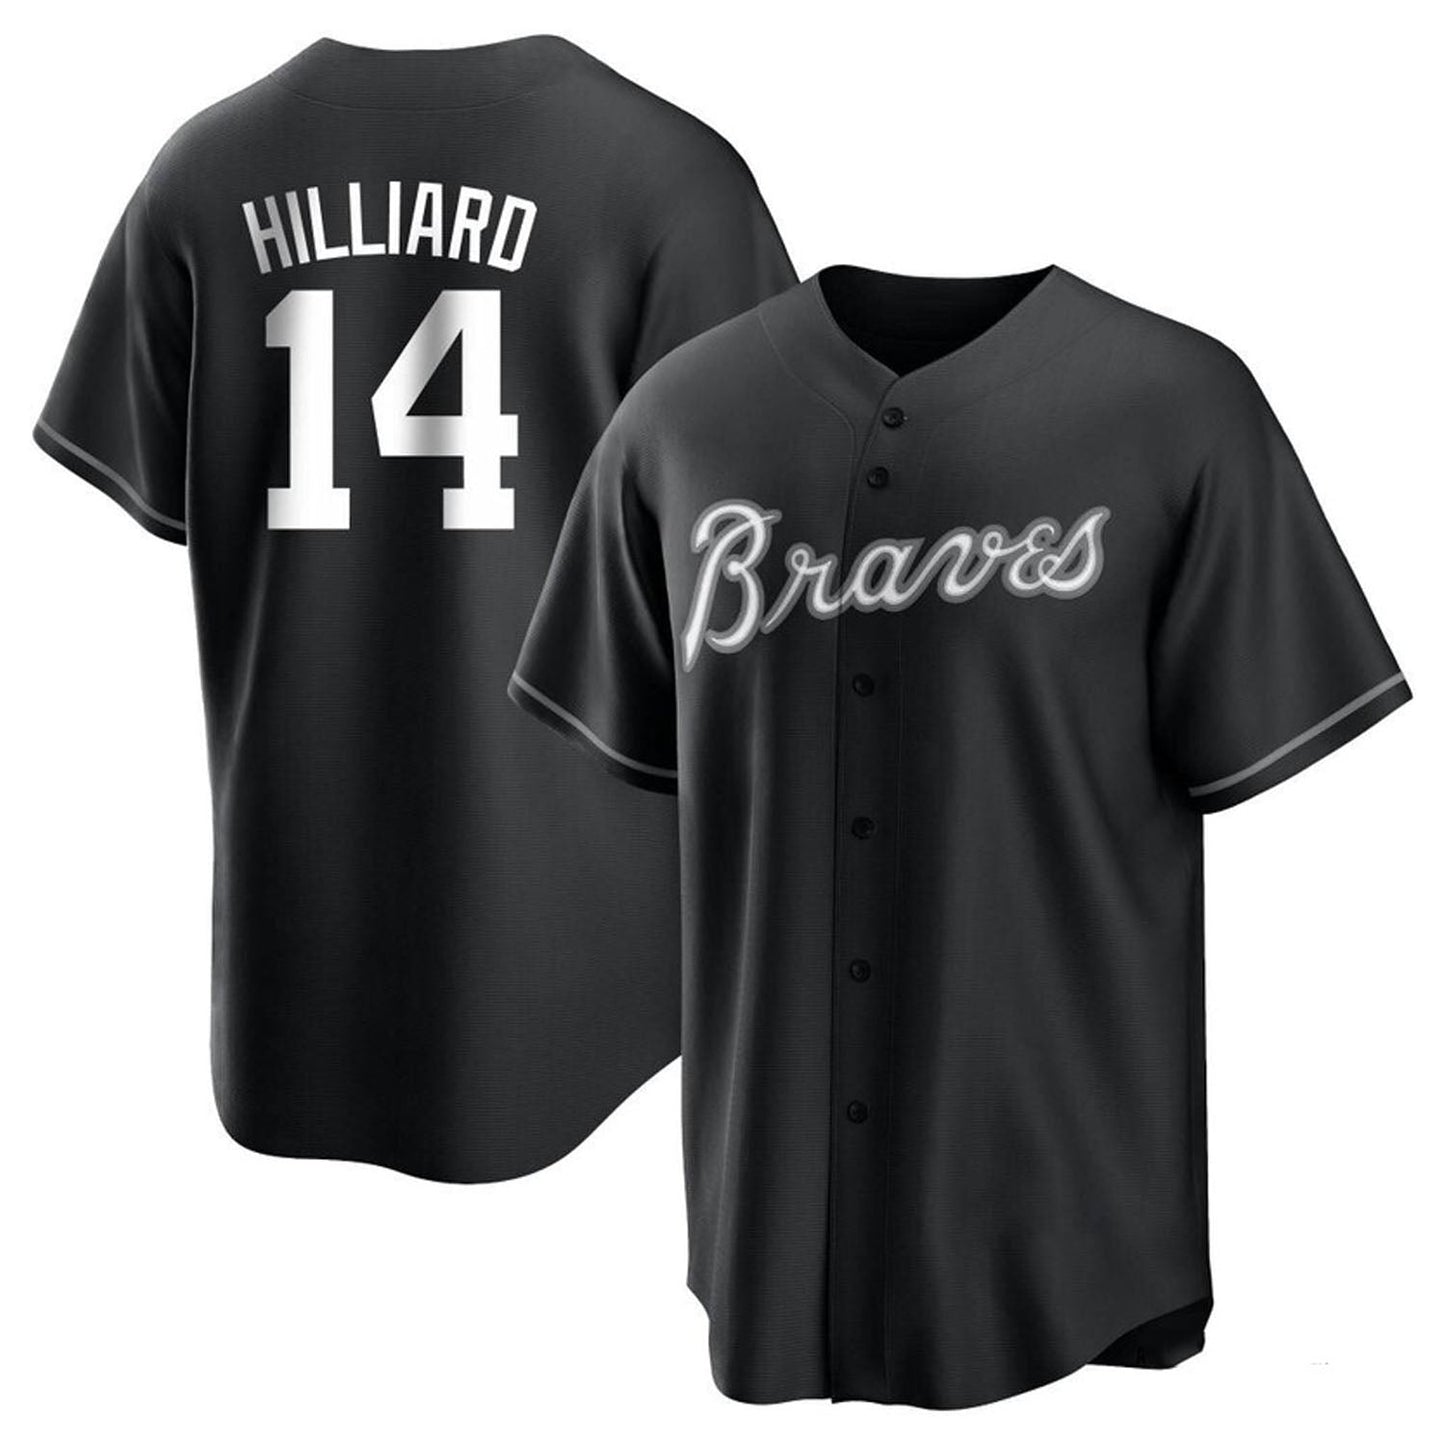 MLB Sam Hilliard Atlanta Braves 14 Jersey